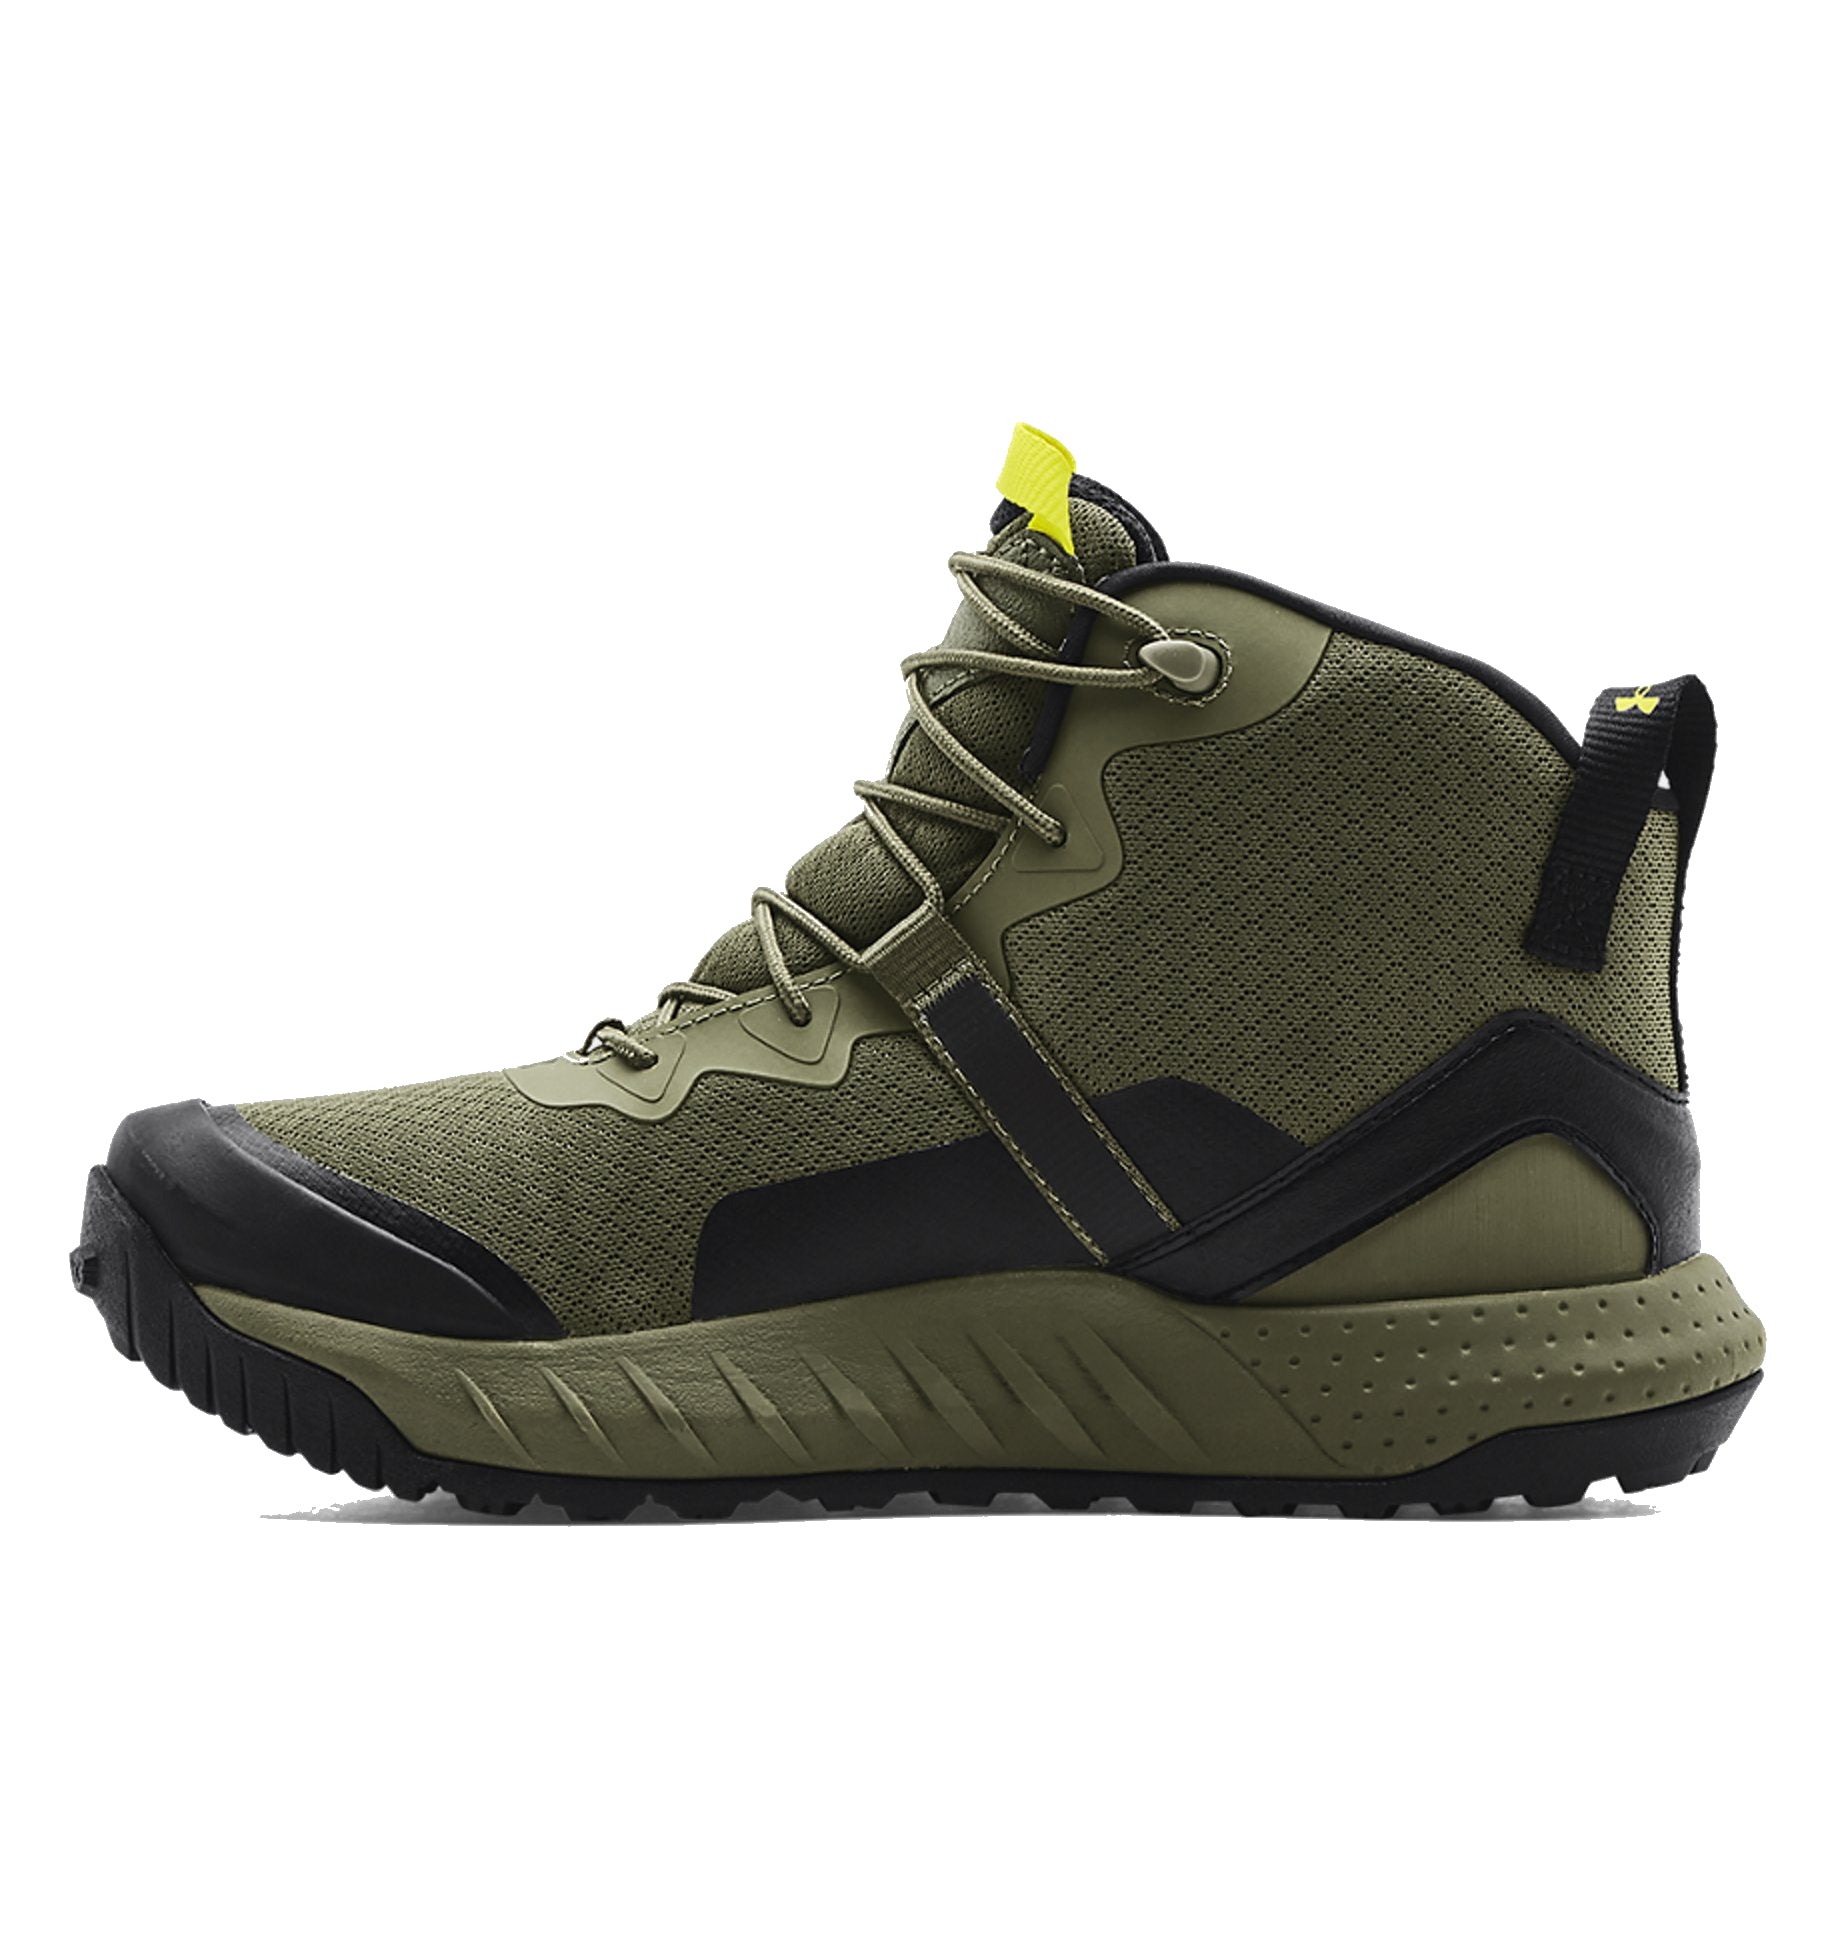 Under Armour Men's Micro G Valsetz Mid Waterproof Leather Boots